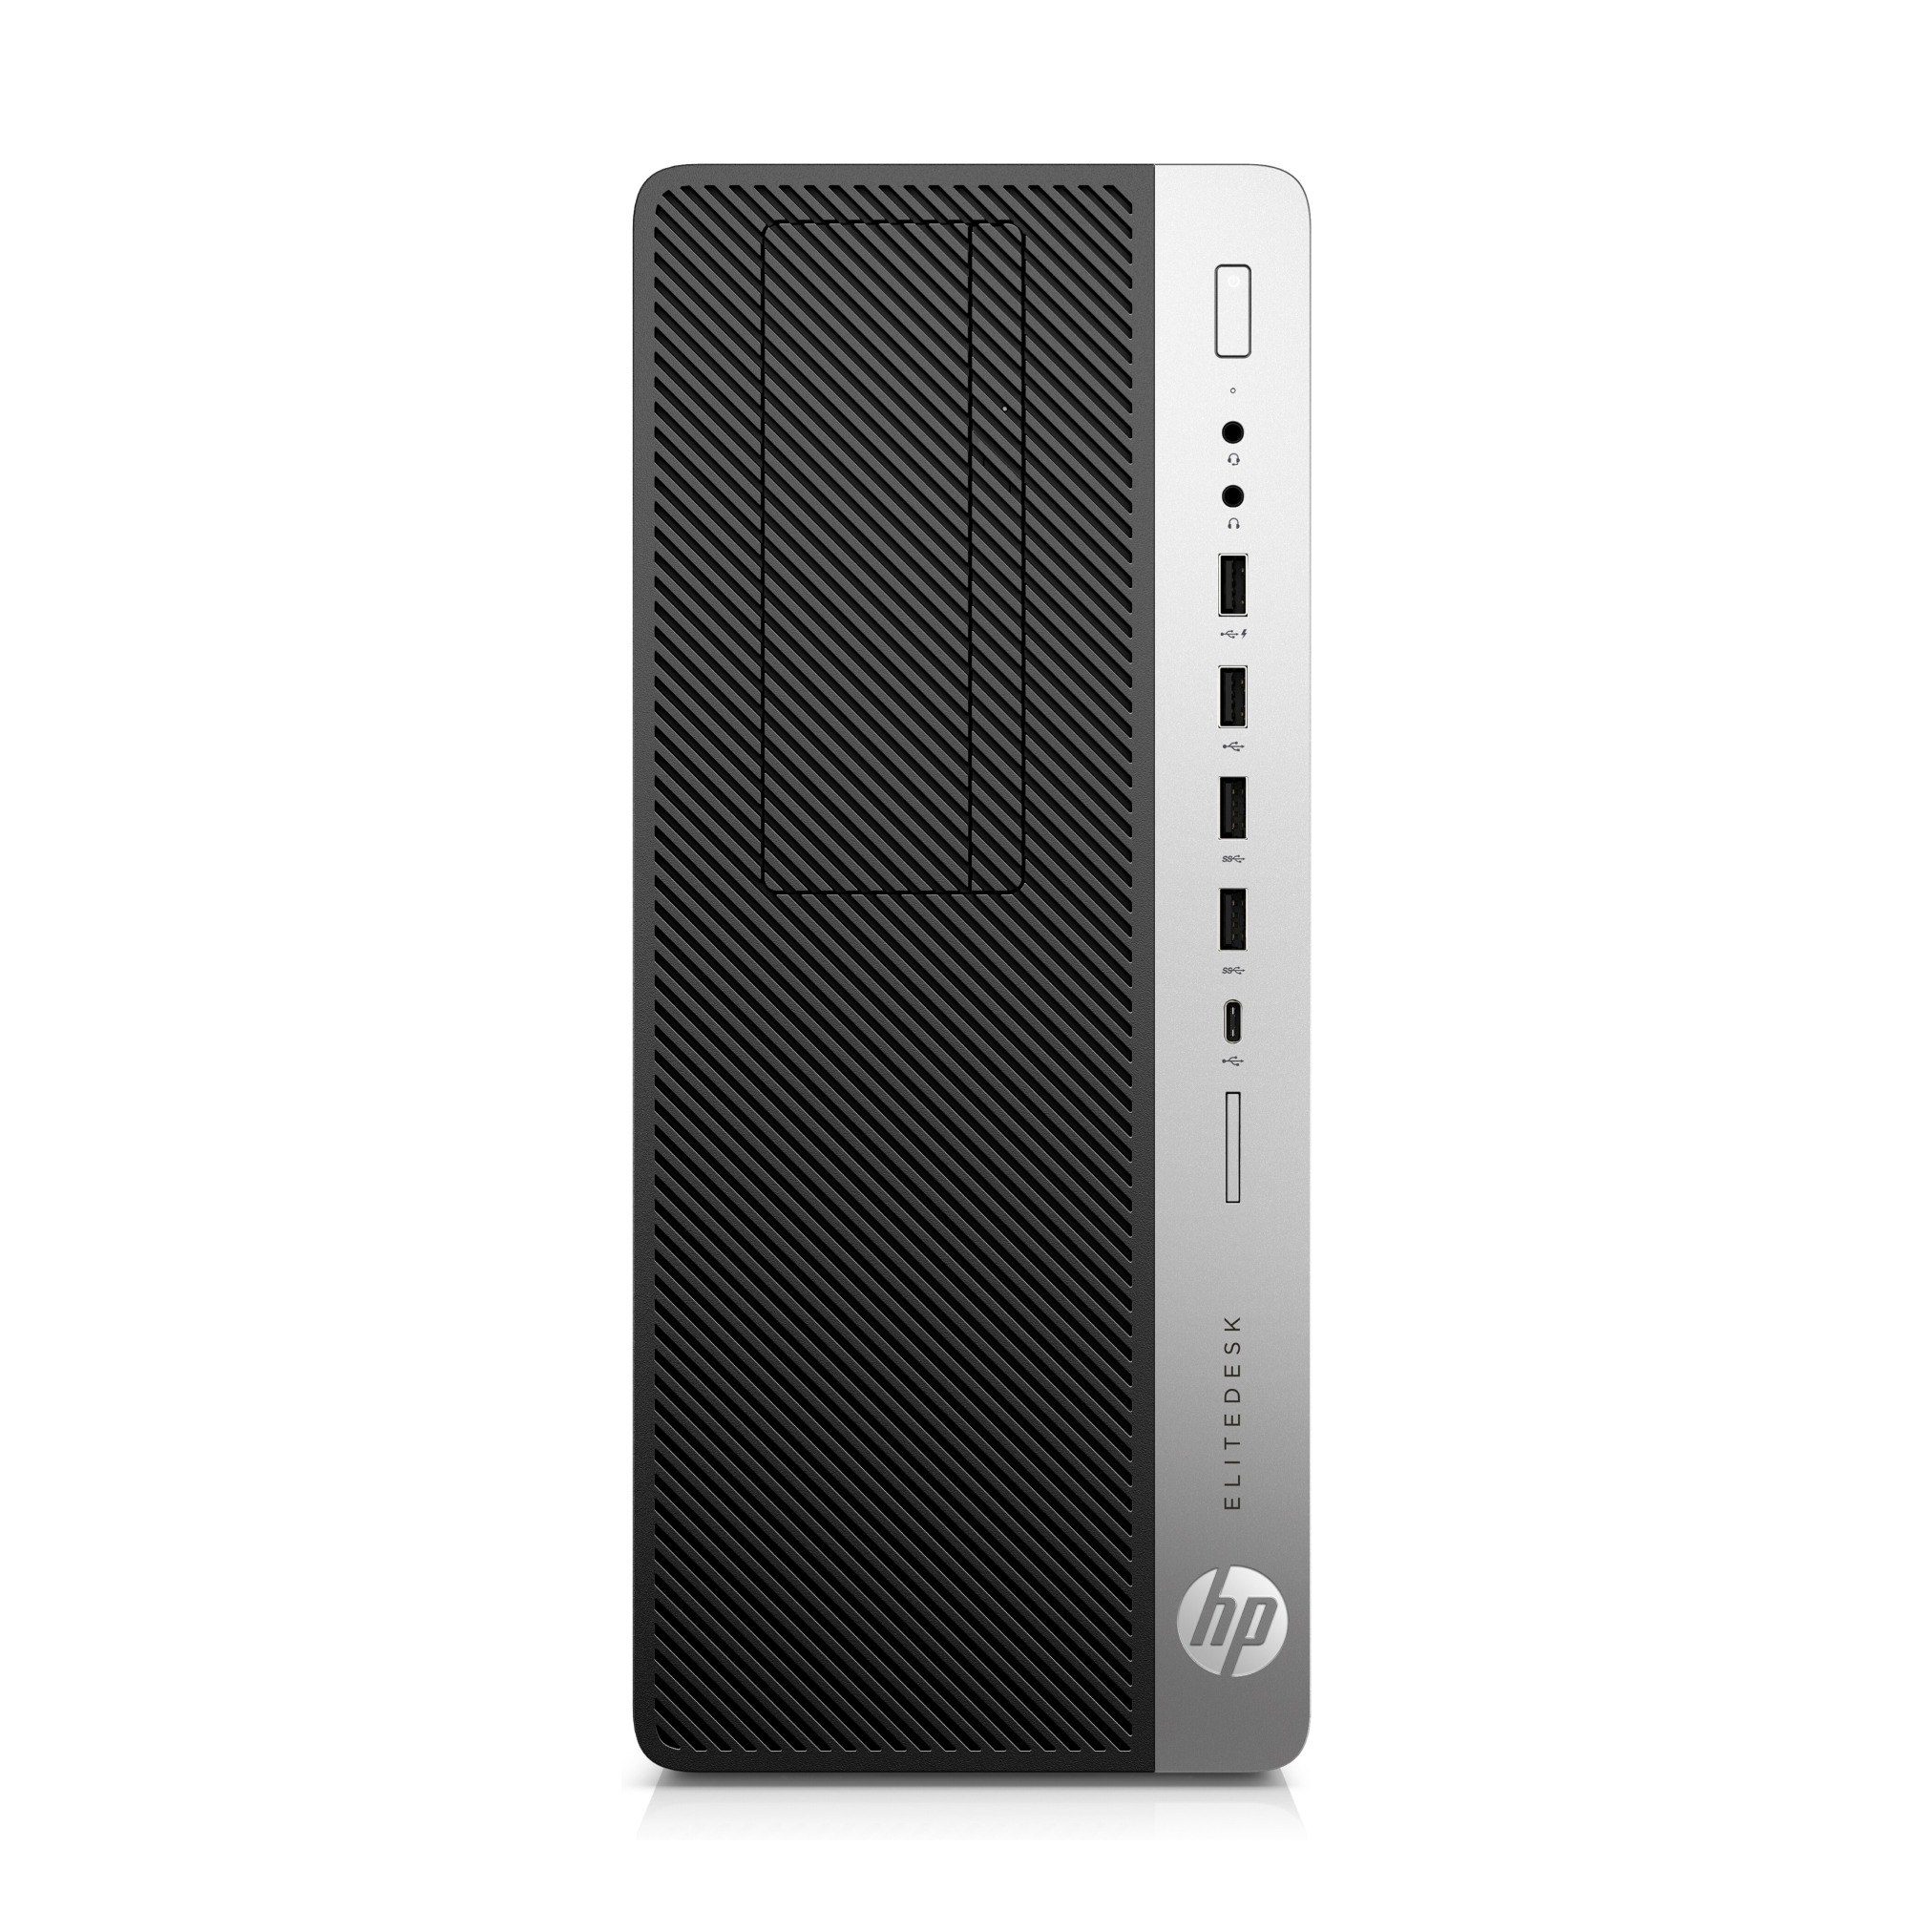 HP EliteDesk 800 G4 (Mini) - Windows 11 Pro - Intel Core i5-8500 - 8 GB RAM - 256 GB